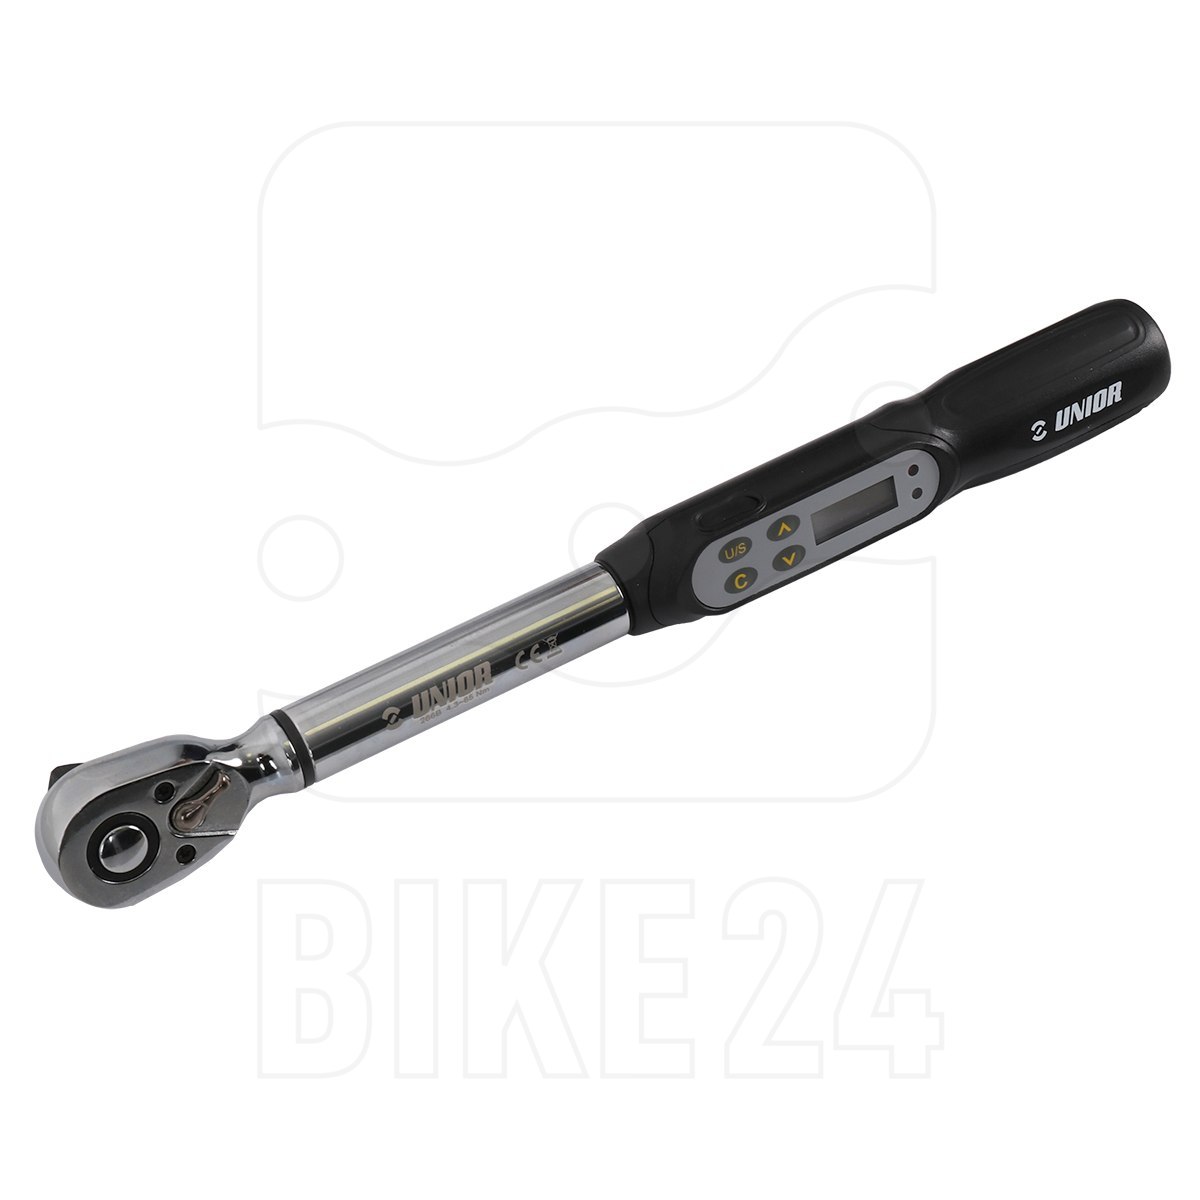 Productfoto van Unior Bike Tools Electronic Torque Wrench - 266B 4,3-85Nm